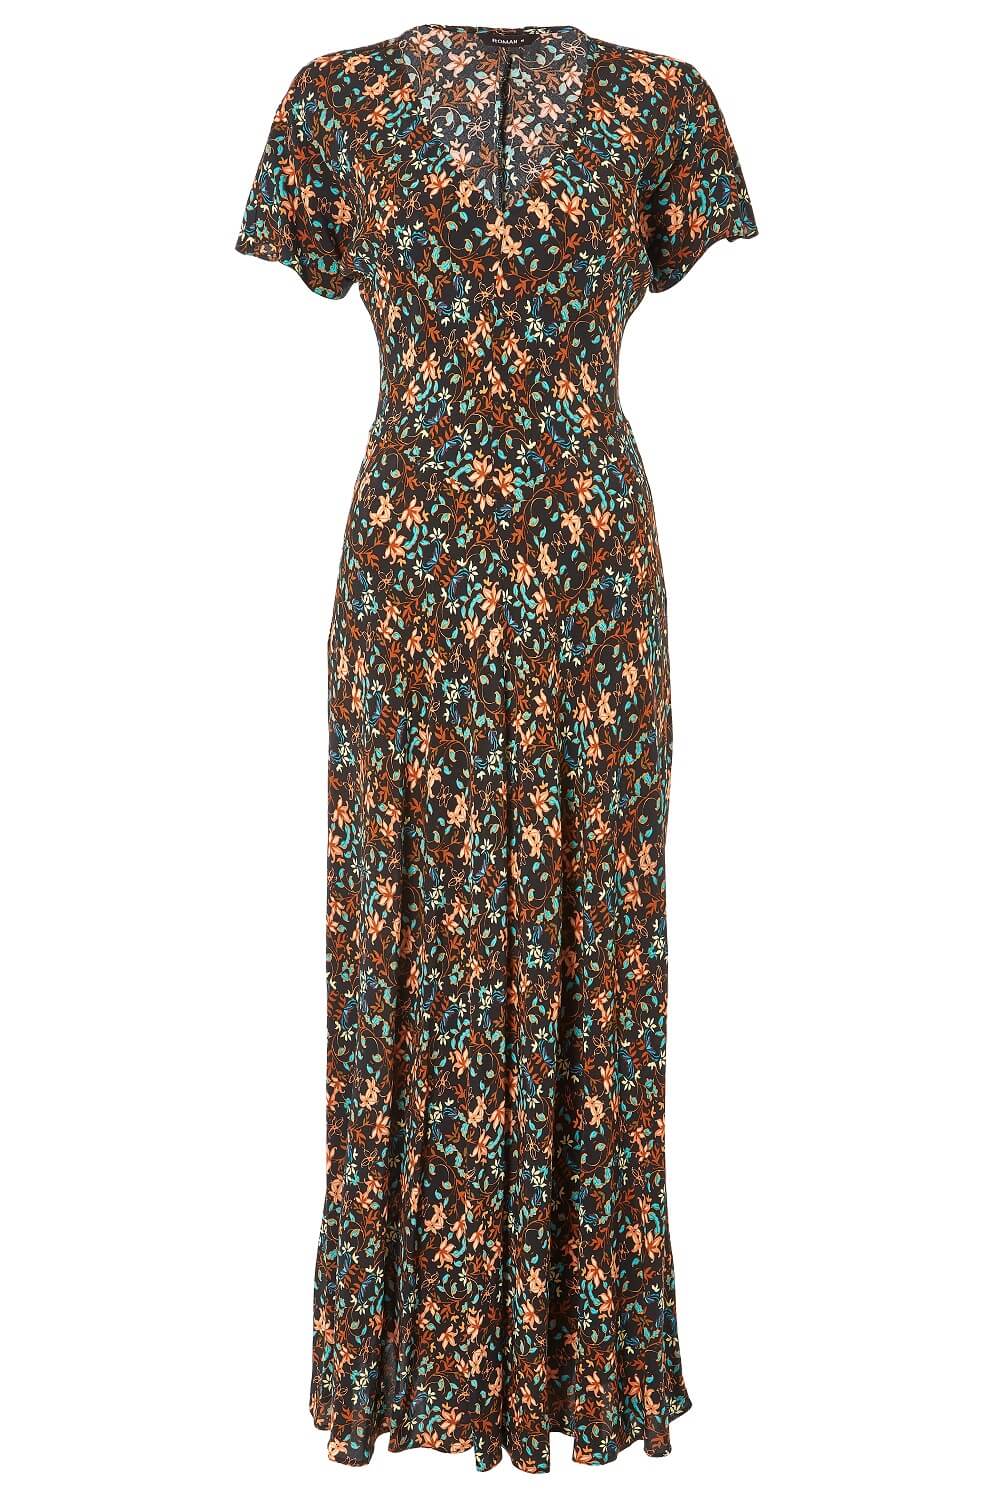 Floral Bias Cut Maxi Dress in Black - Roman Originals UK